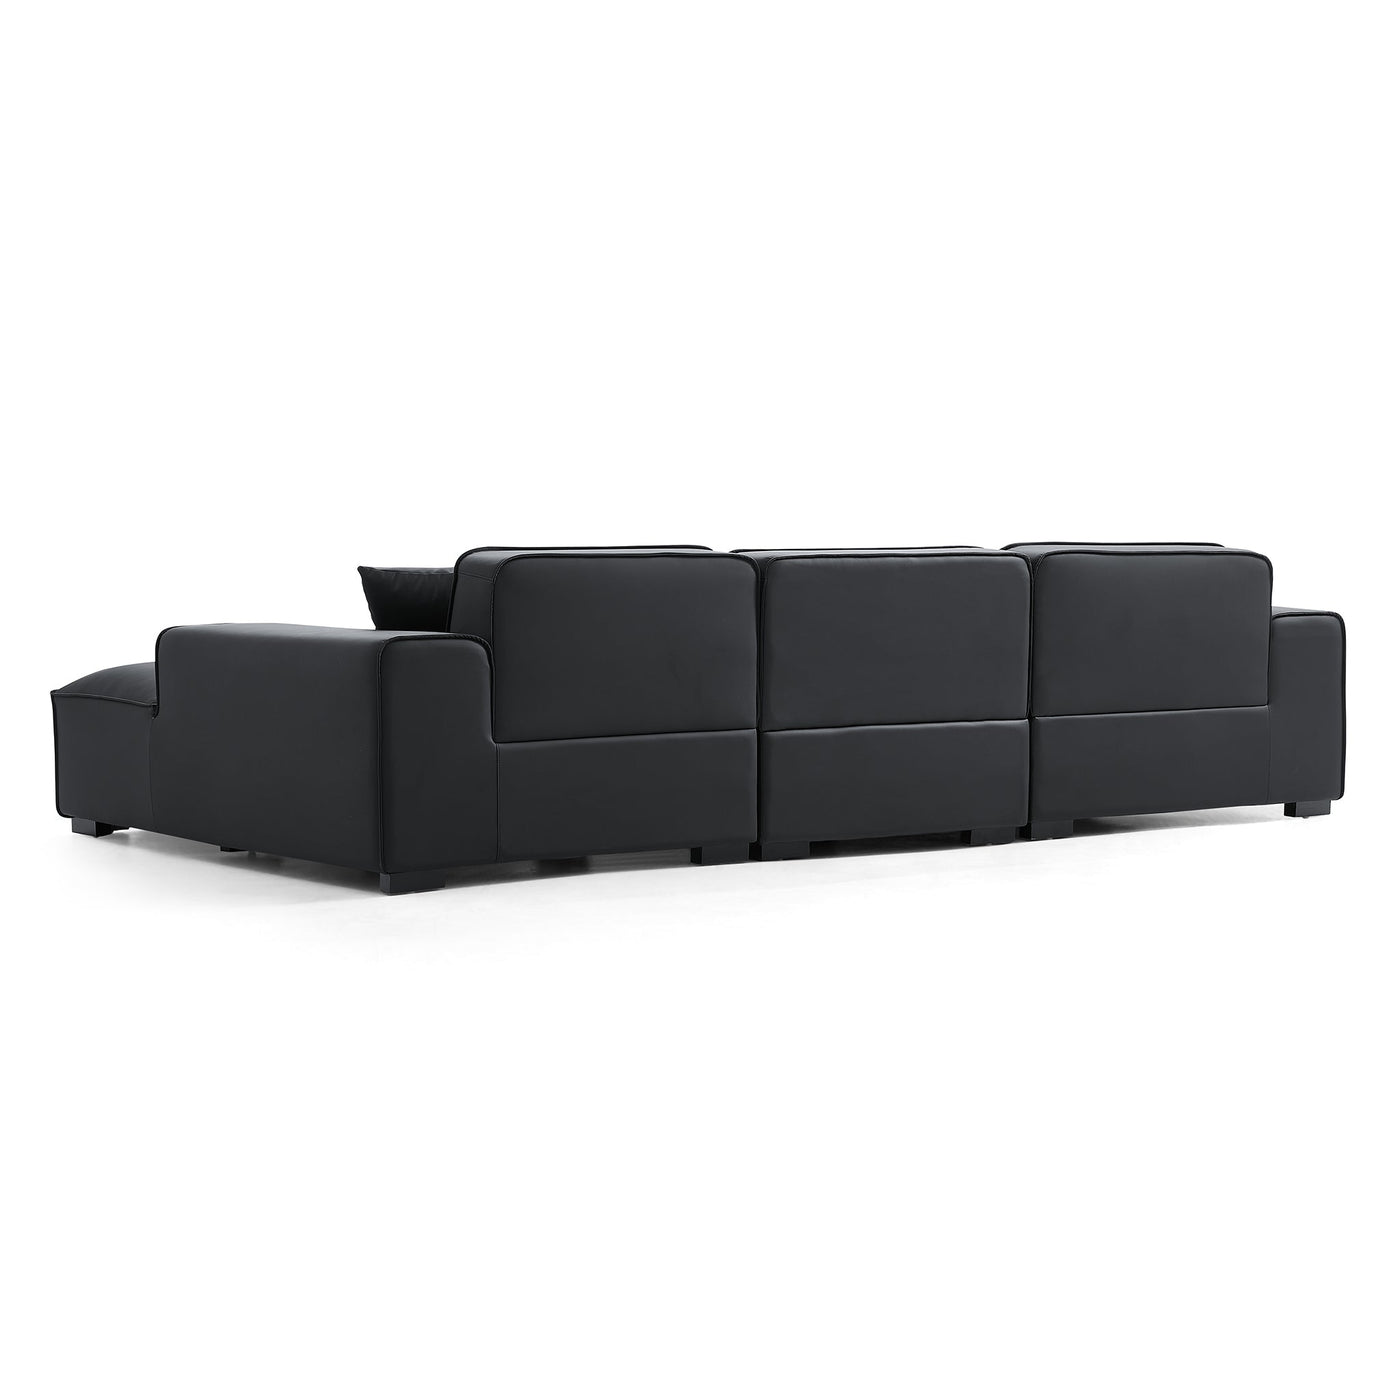 Domus Modular Beige Leather Sectional Sofa-Black-126.0"